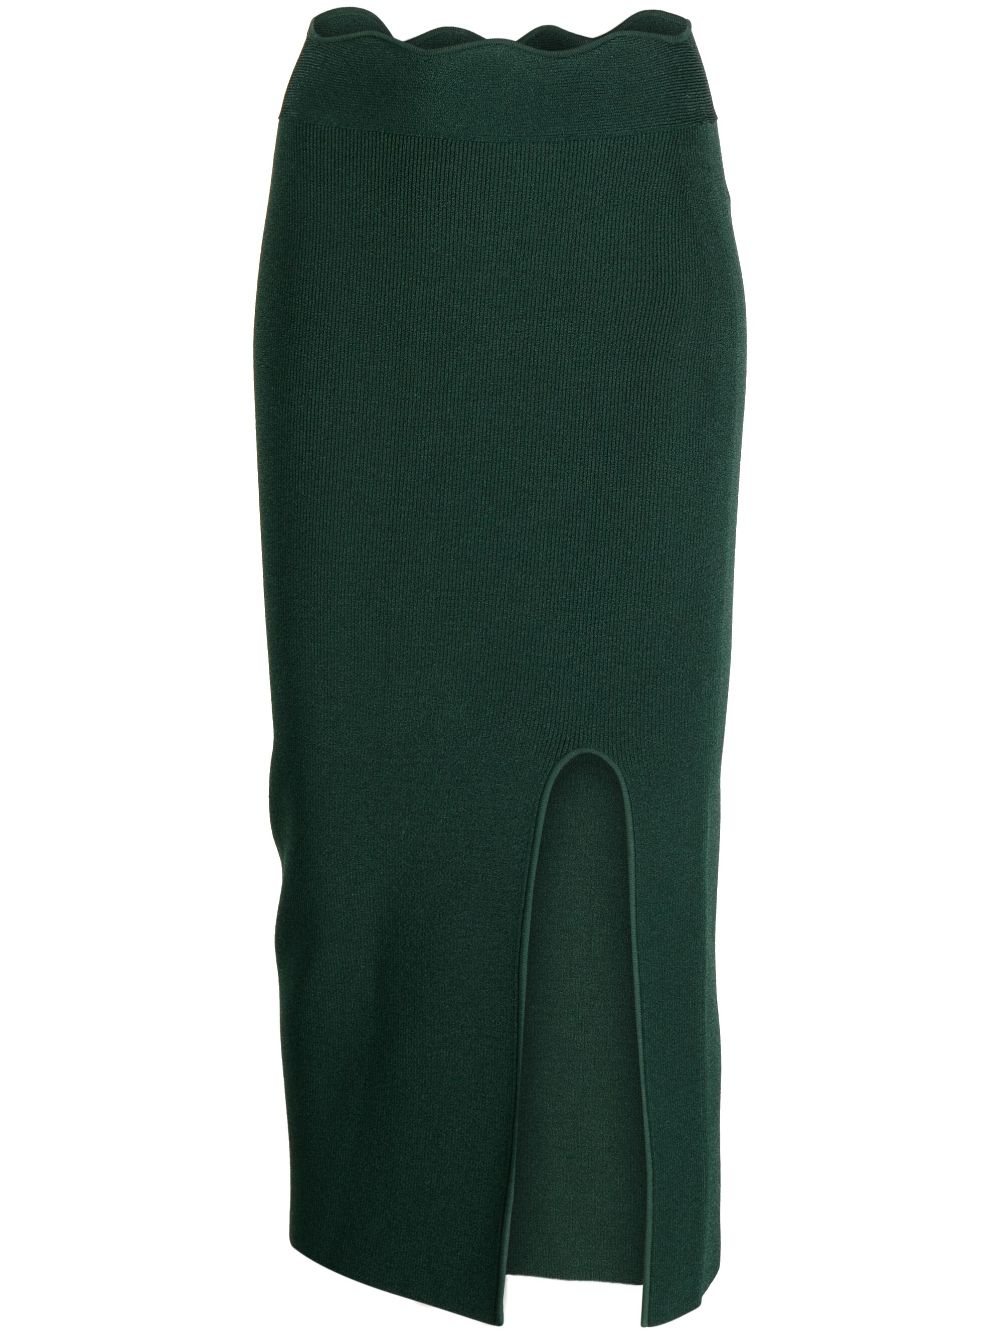 Galvan London Delia knitted pencil skirt - Green